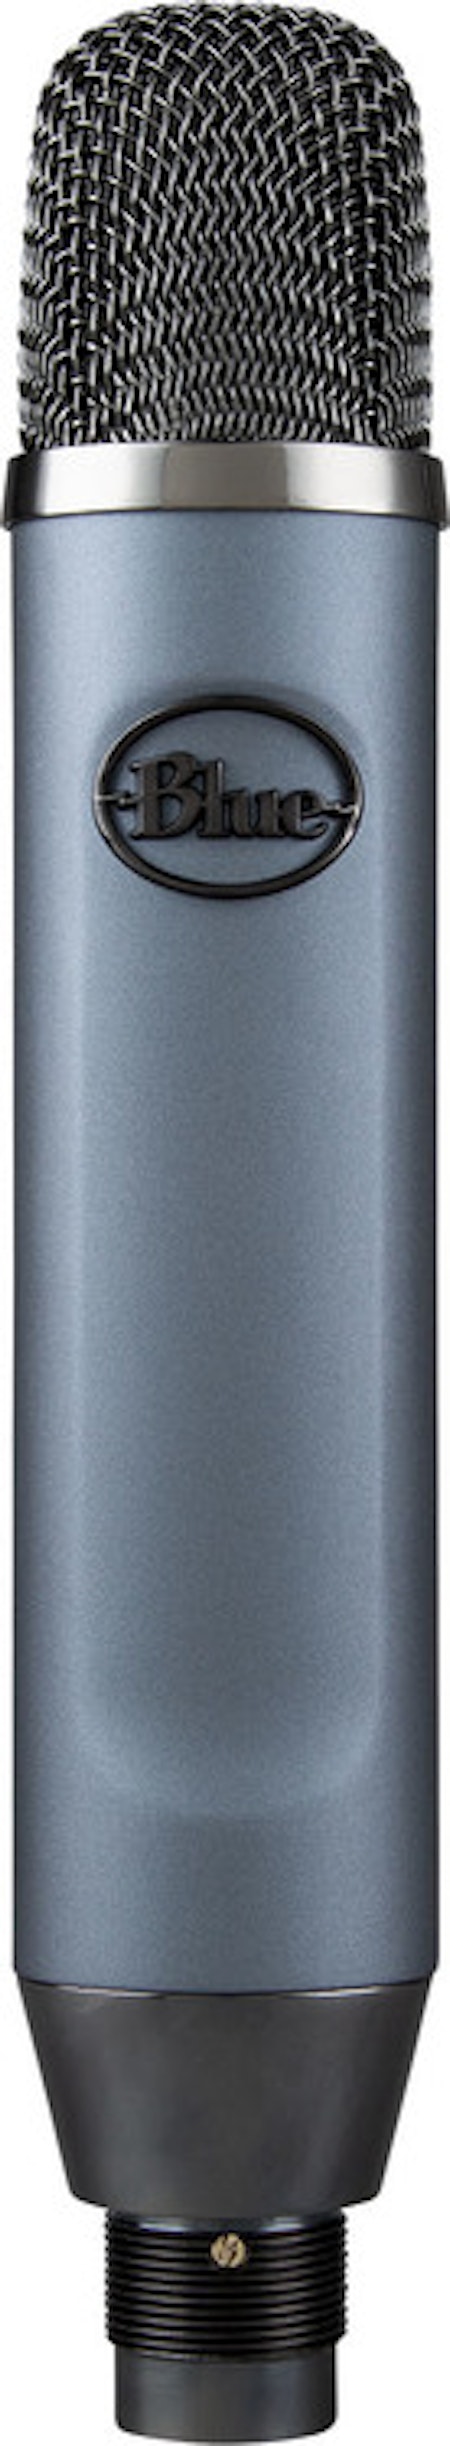 Blue Ember kondensatormikrofon